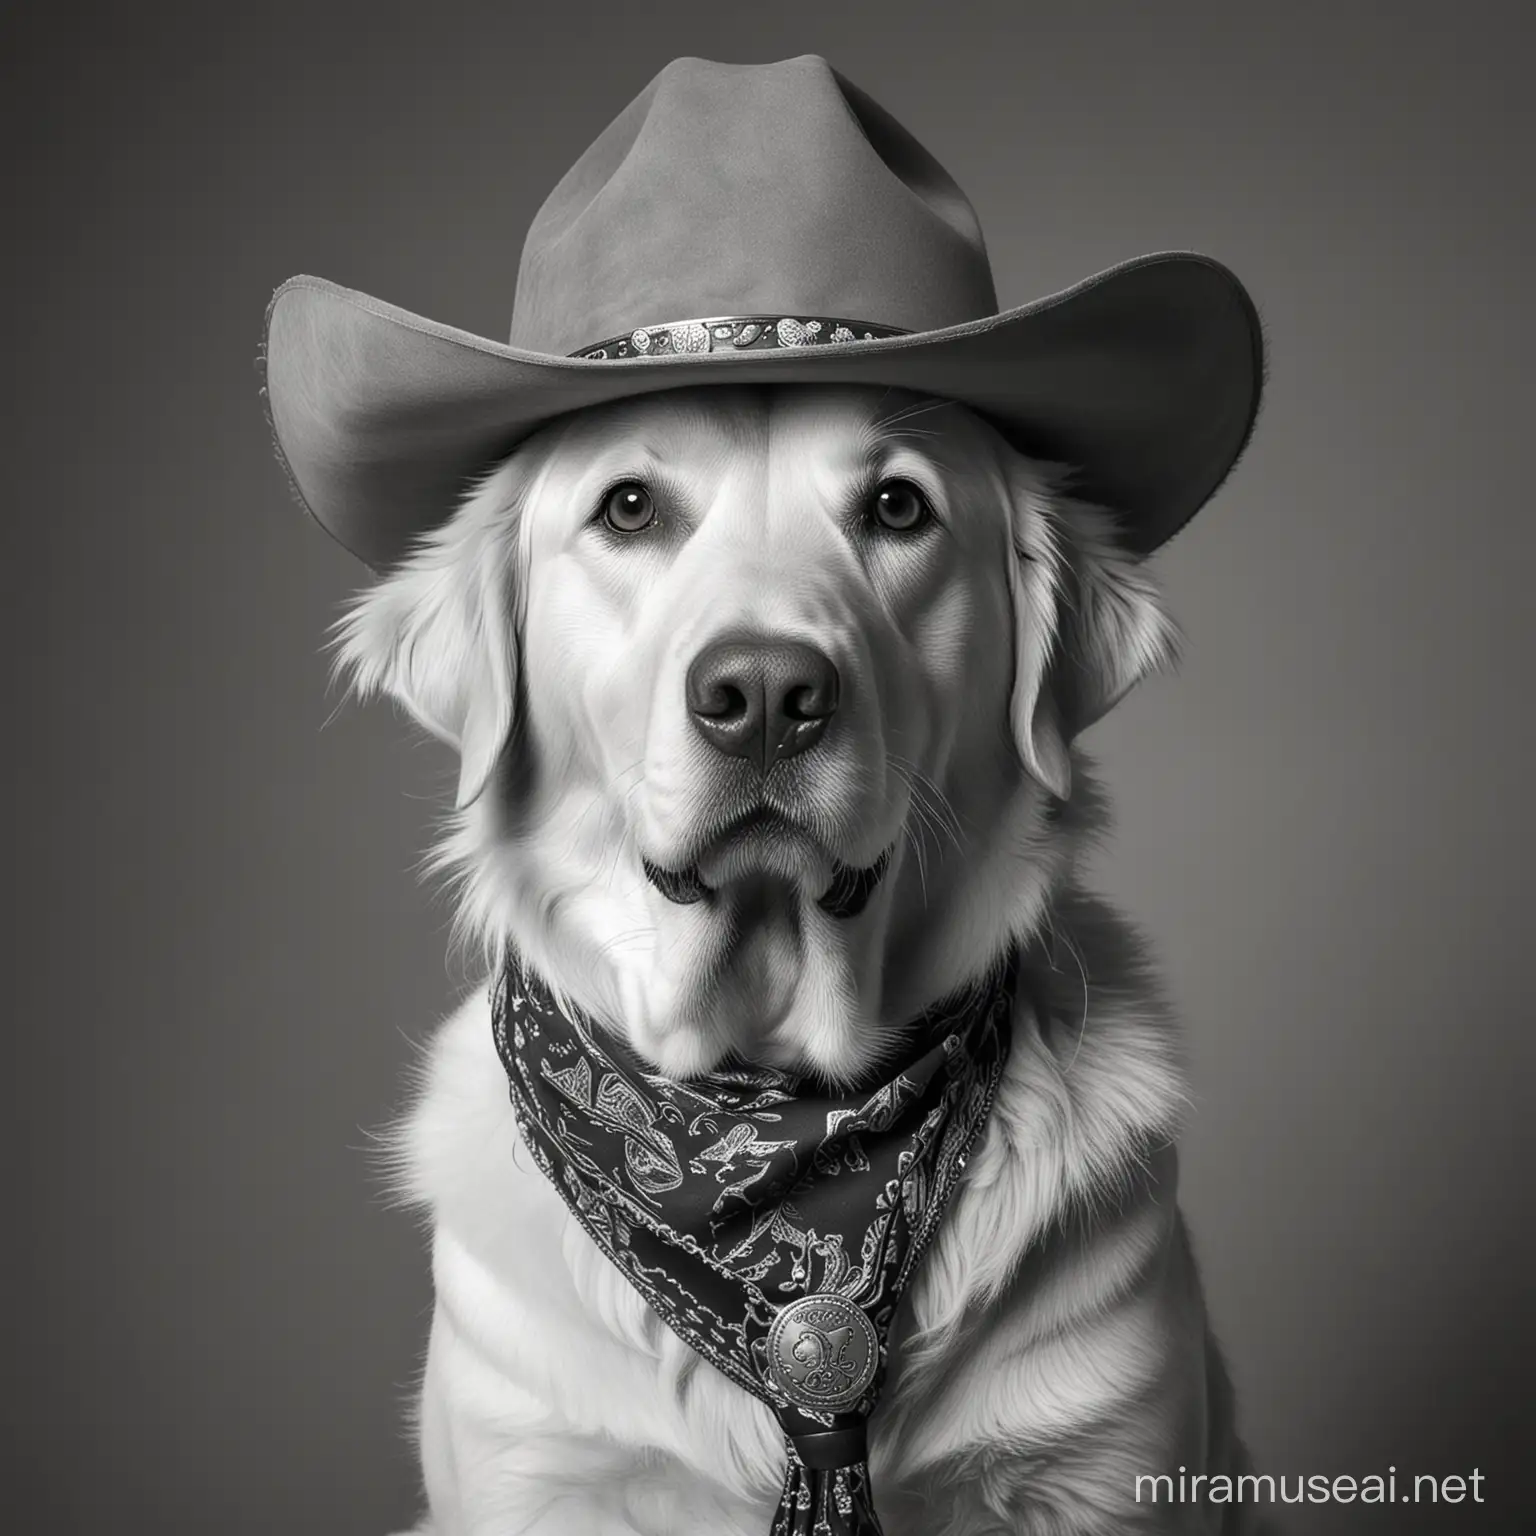 Golden Retriever Dog in Cowboy Hat and Attire